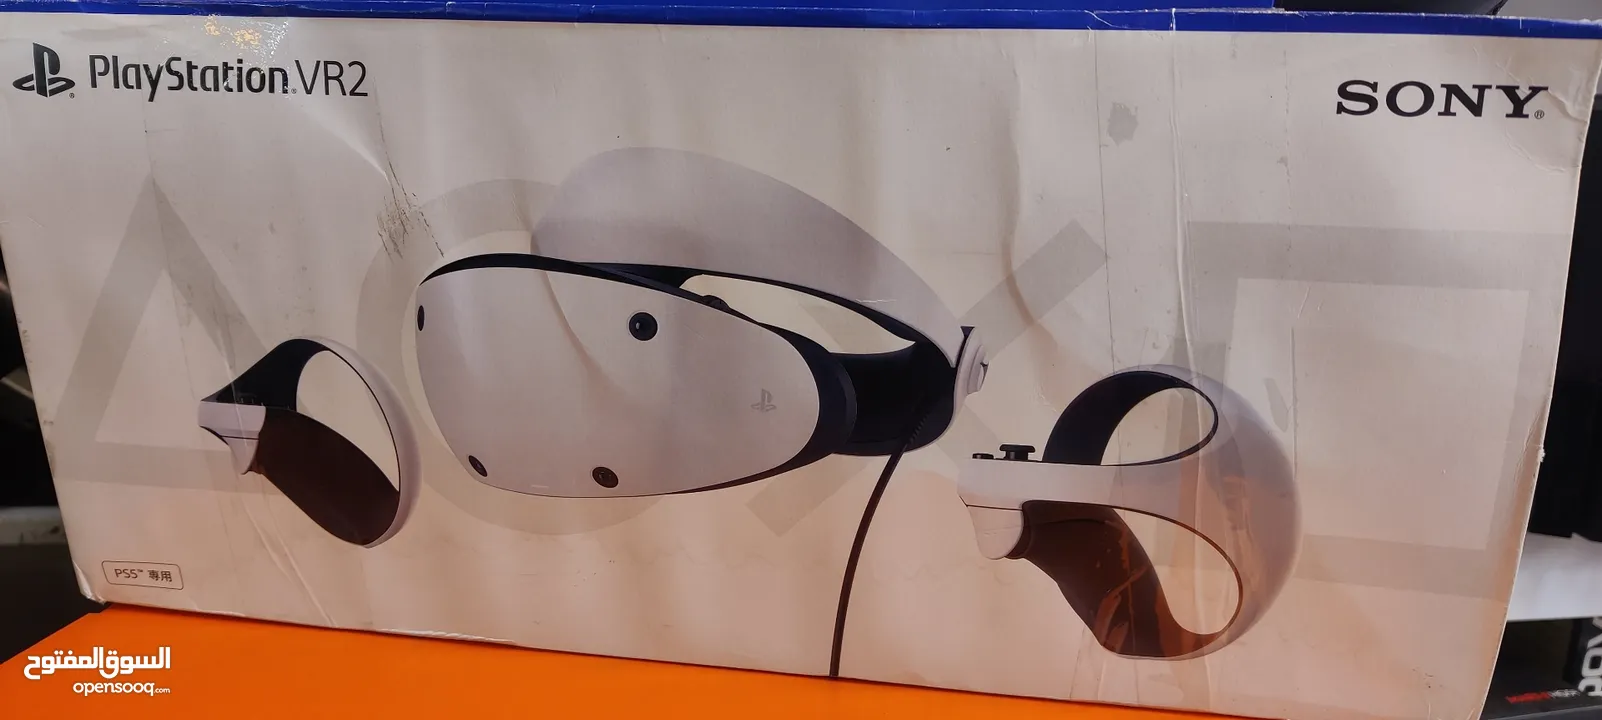 Playstation VR2 open box